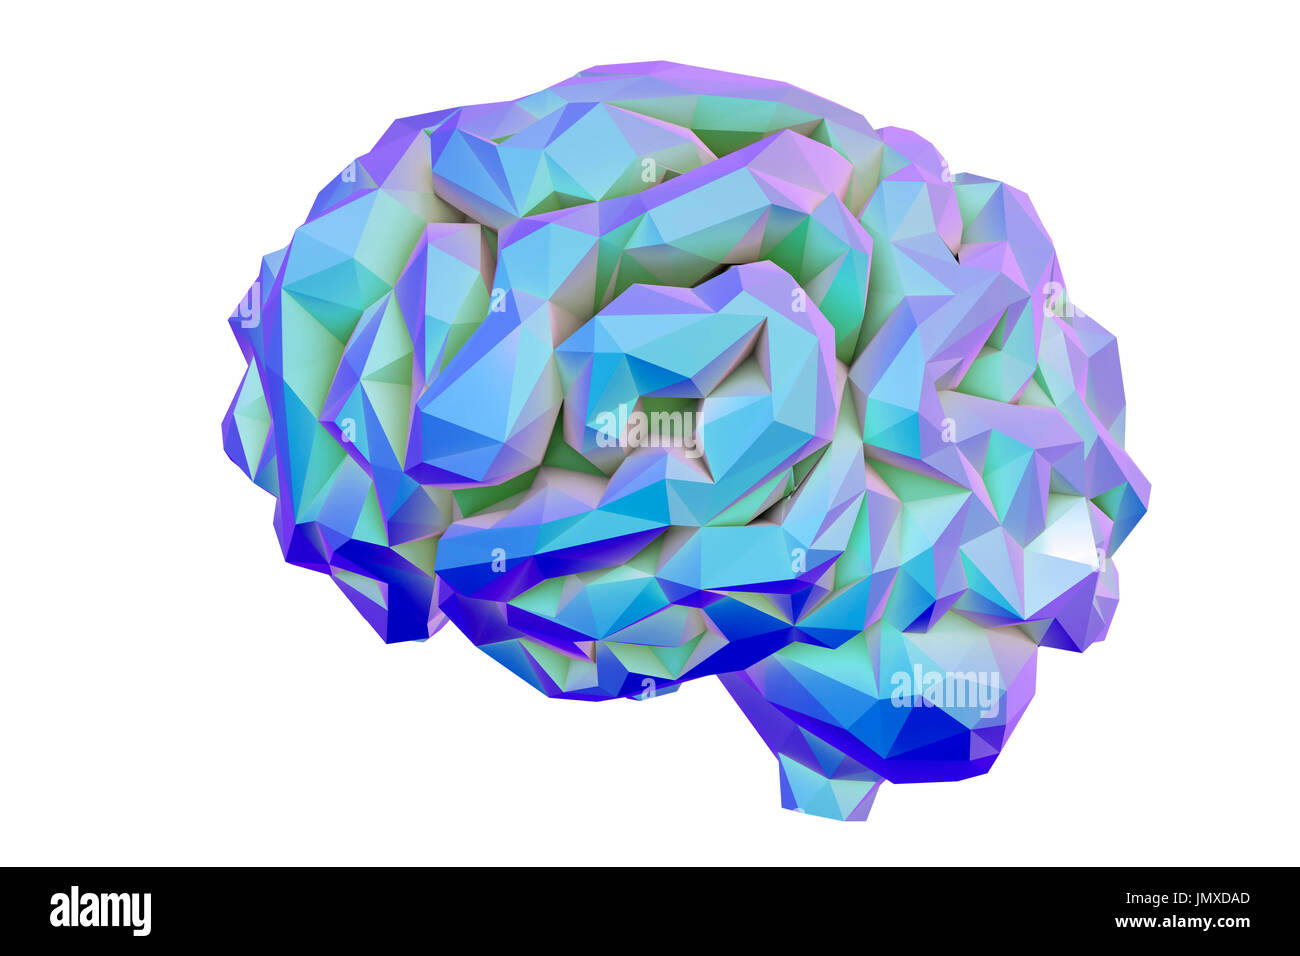 Human brain, low-polygonal computer illustration. Stock Photo